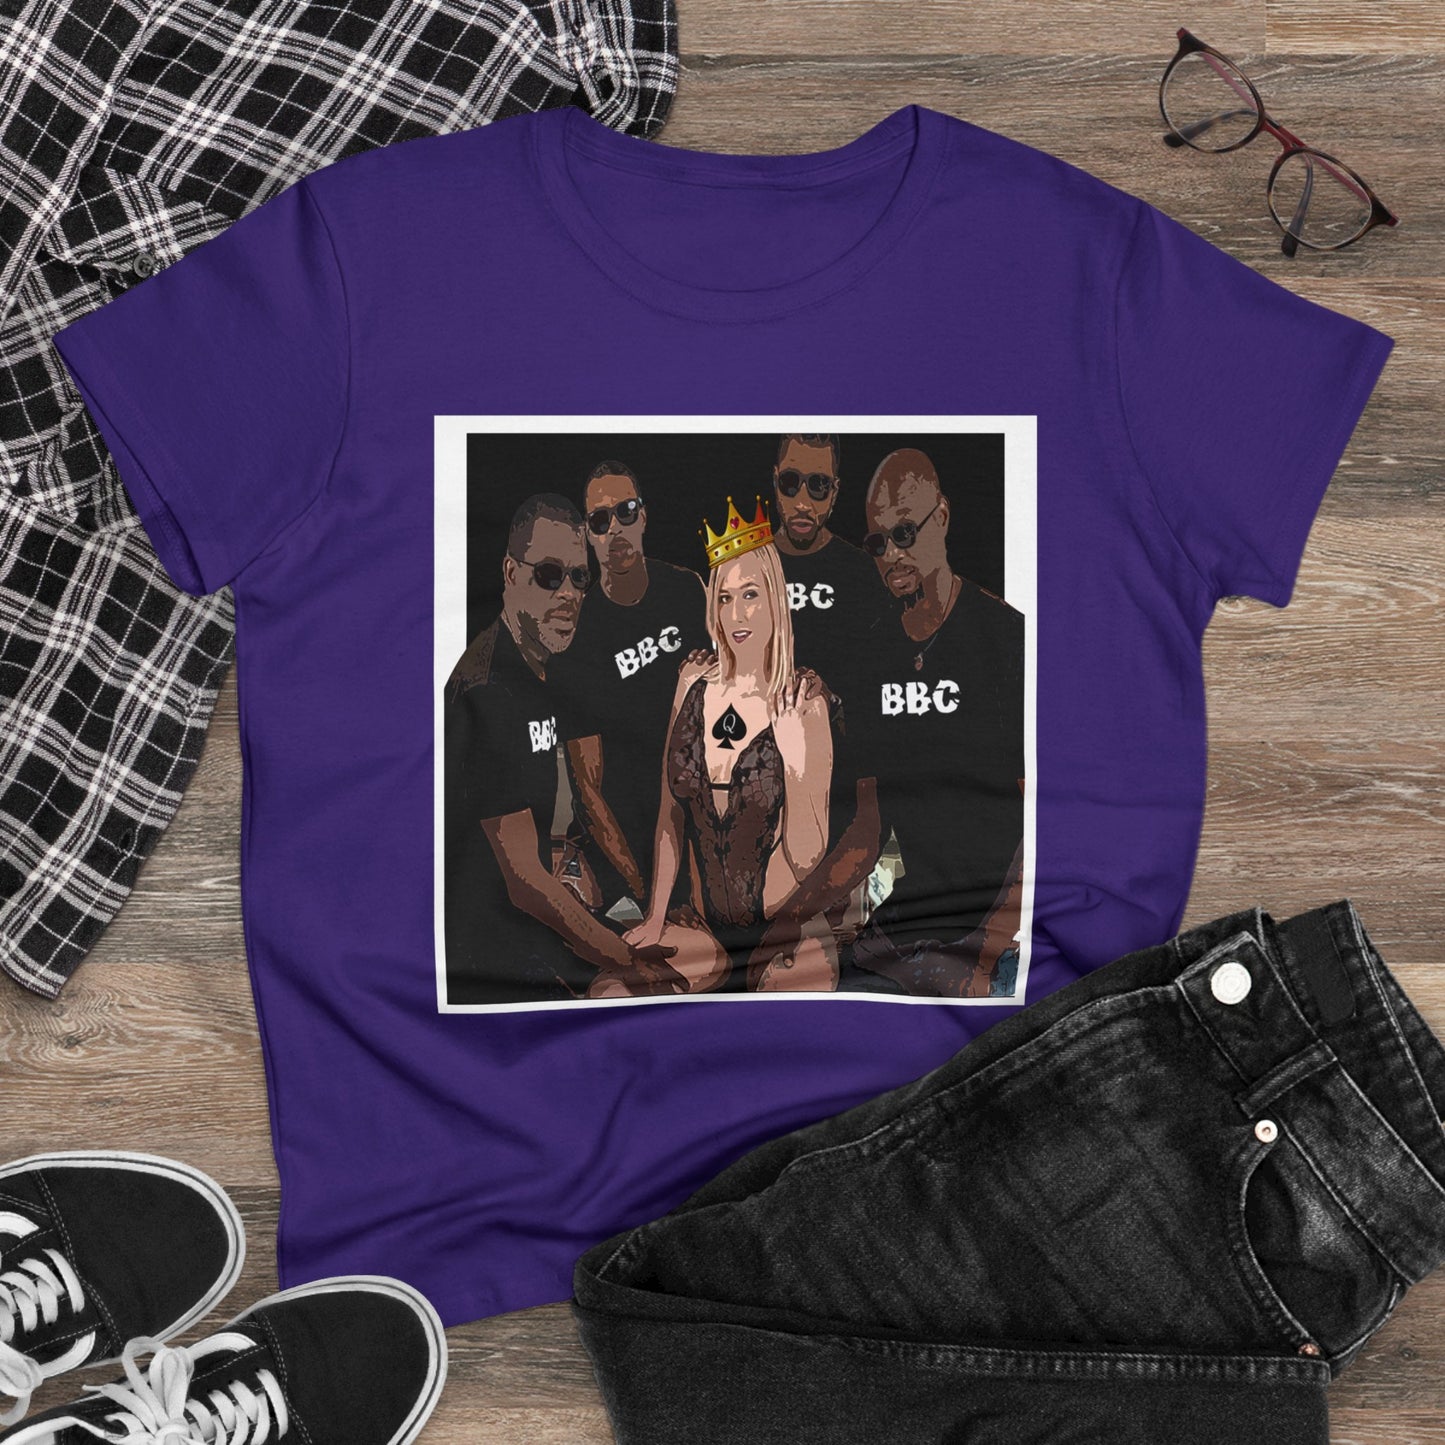 Queen of Spades T Shirt, QOS Shirt, Slut Wife, Cuckold, BBC Blacked Wife, BBC Tee Women's Midweight Cotton Tee